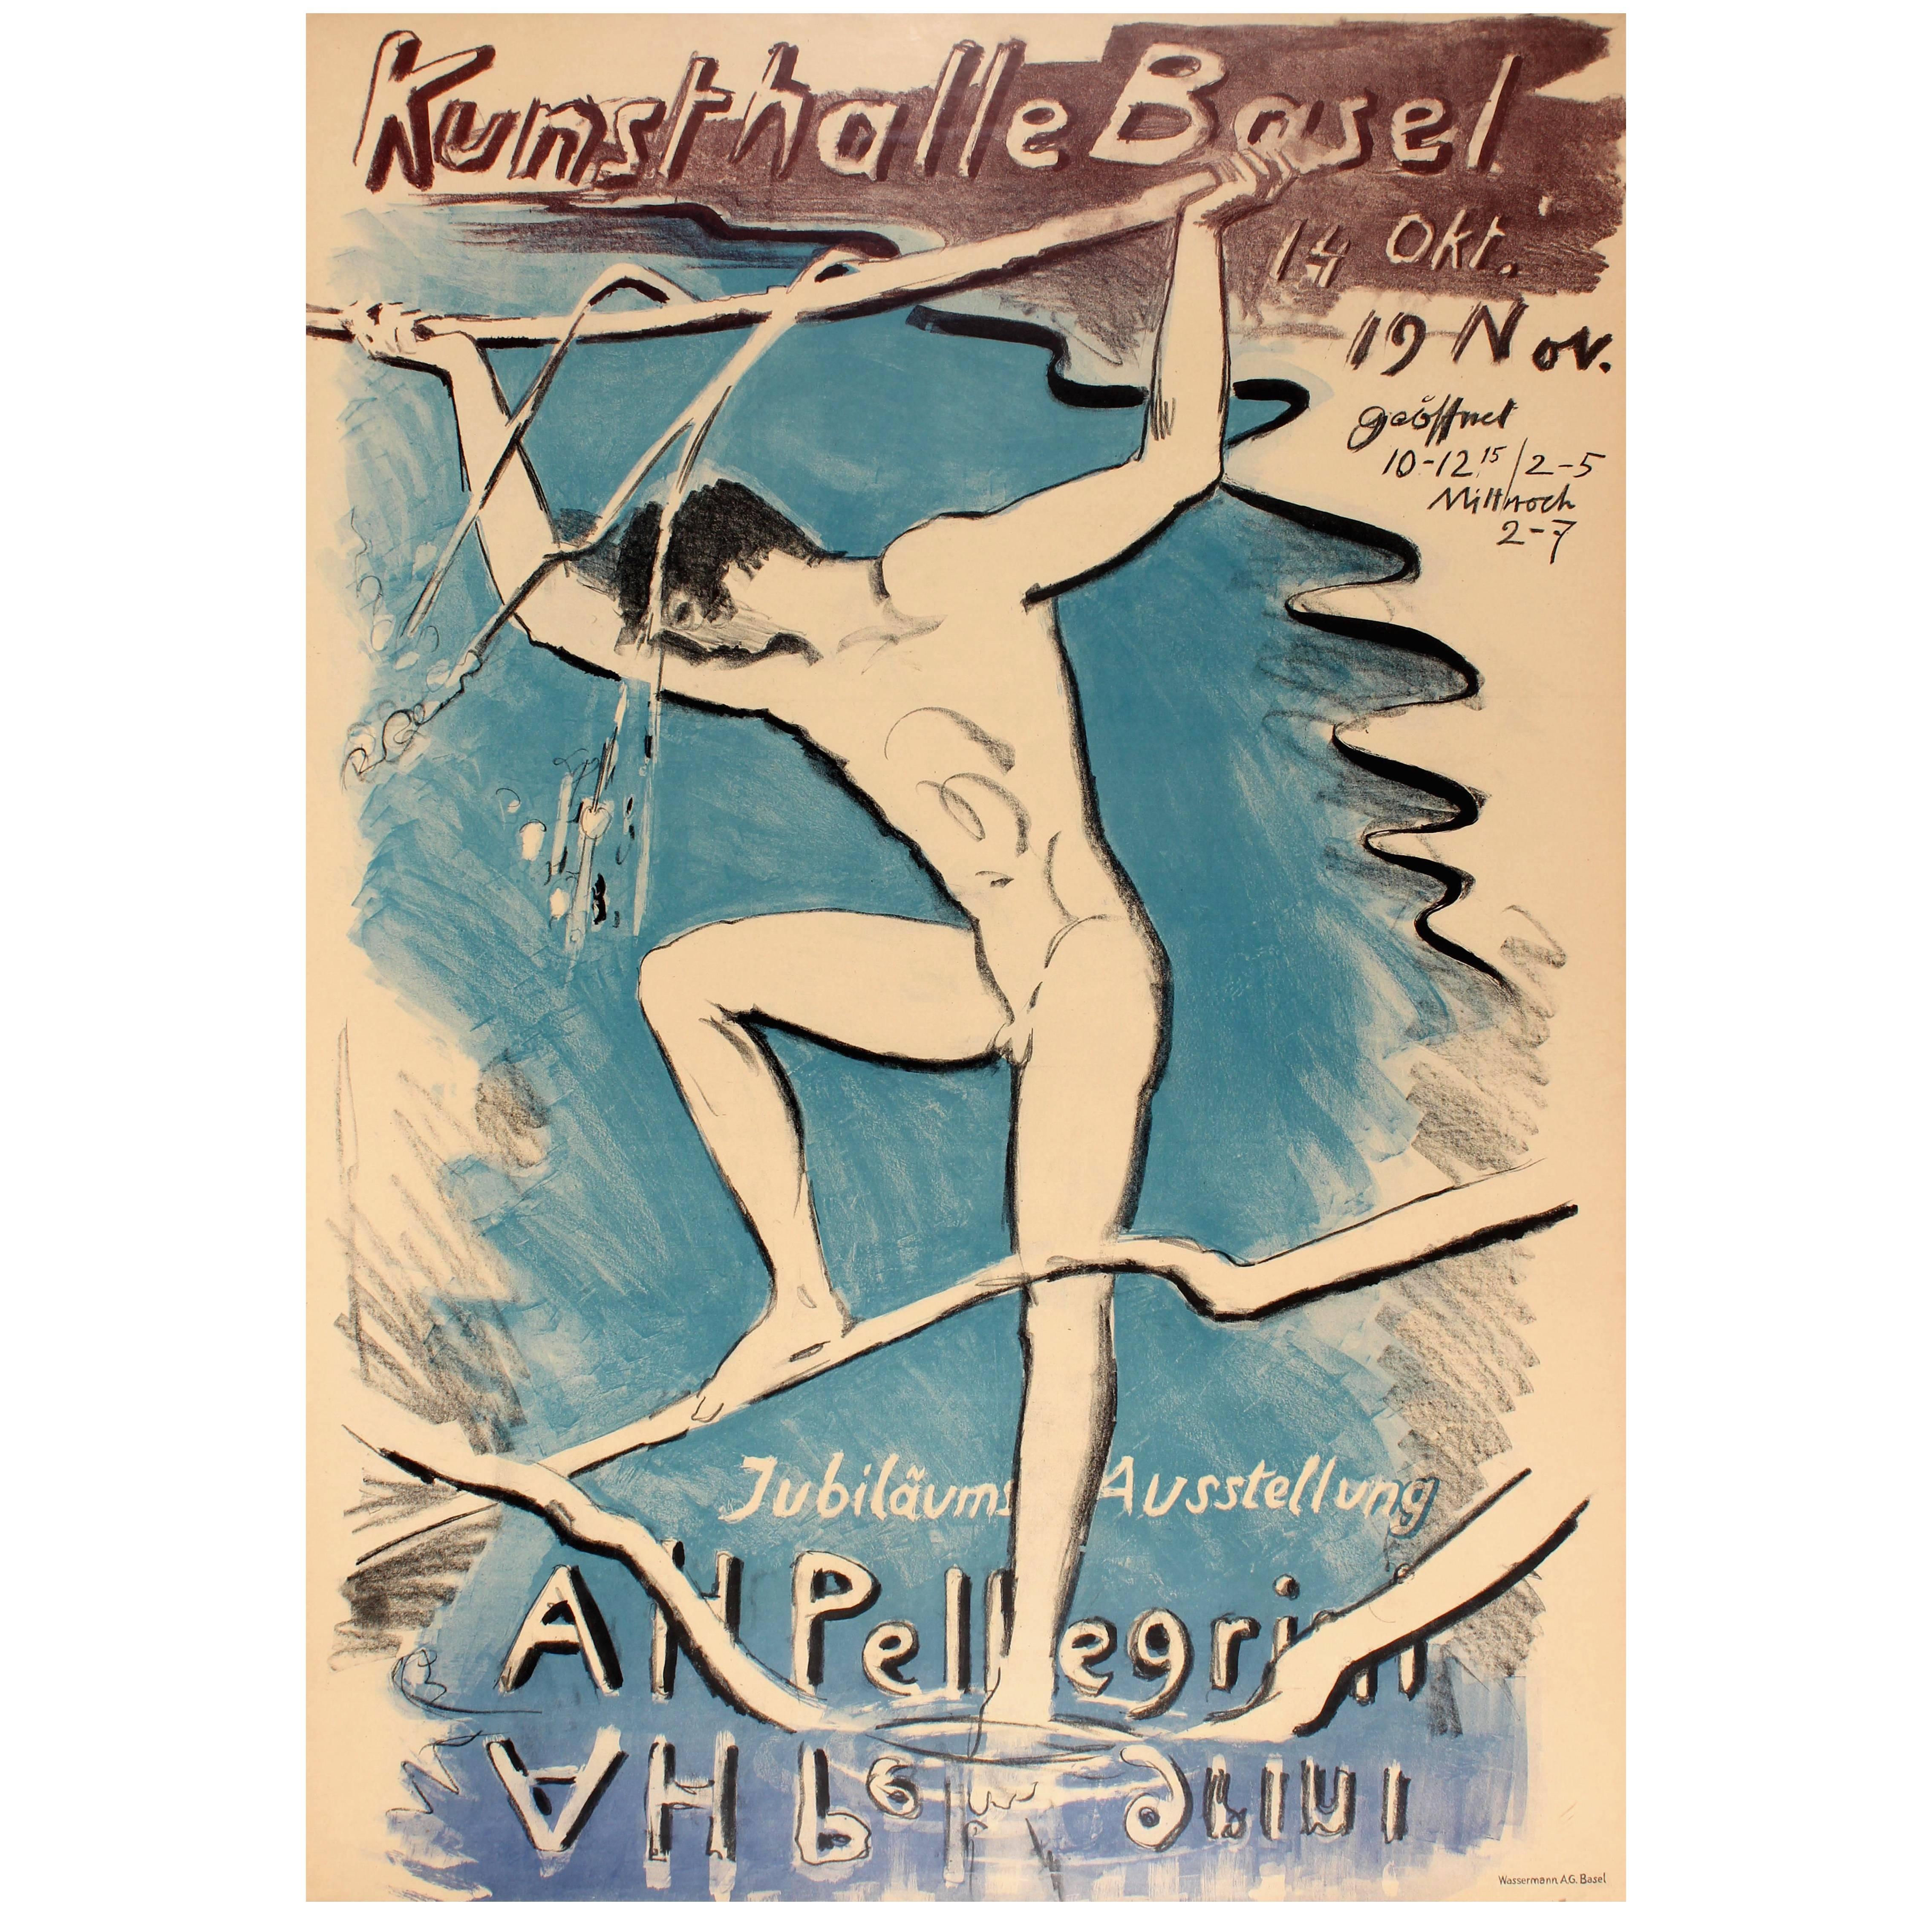 Original Vintage Pelligrini Art Exhibition Poster - Jubilaums Ausstellung Basel